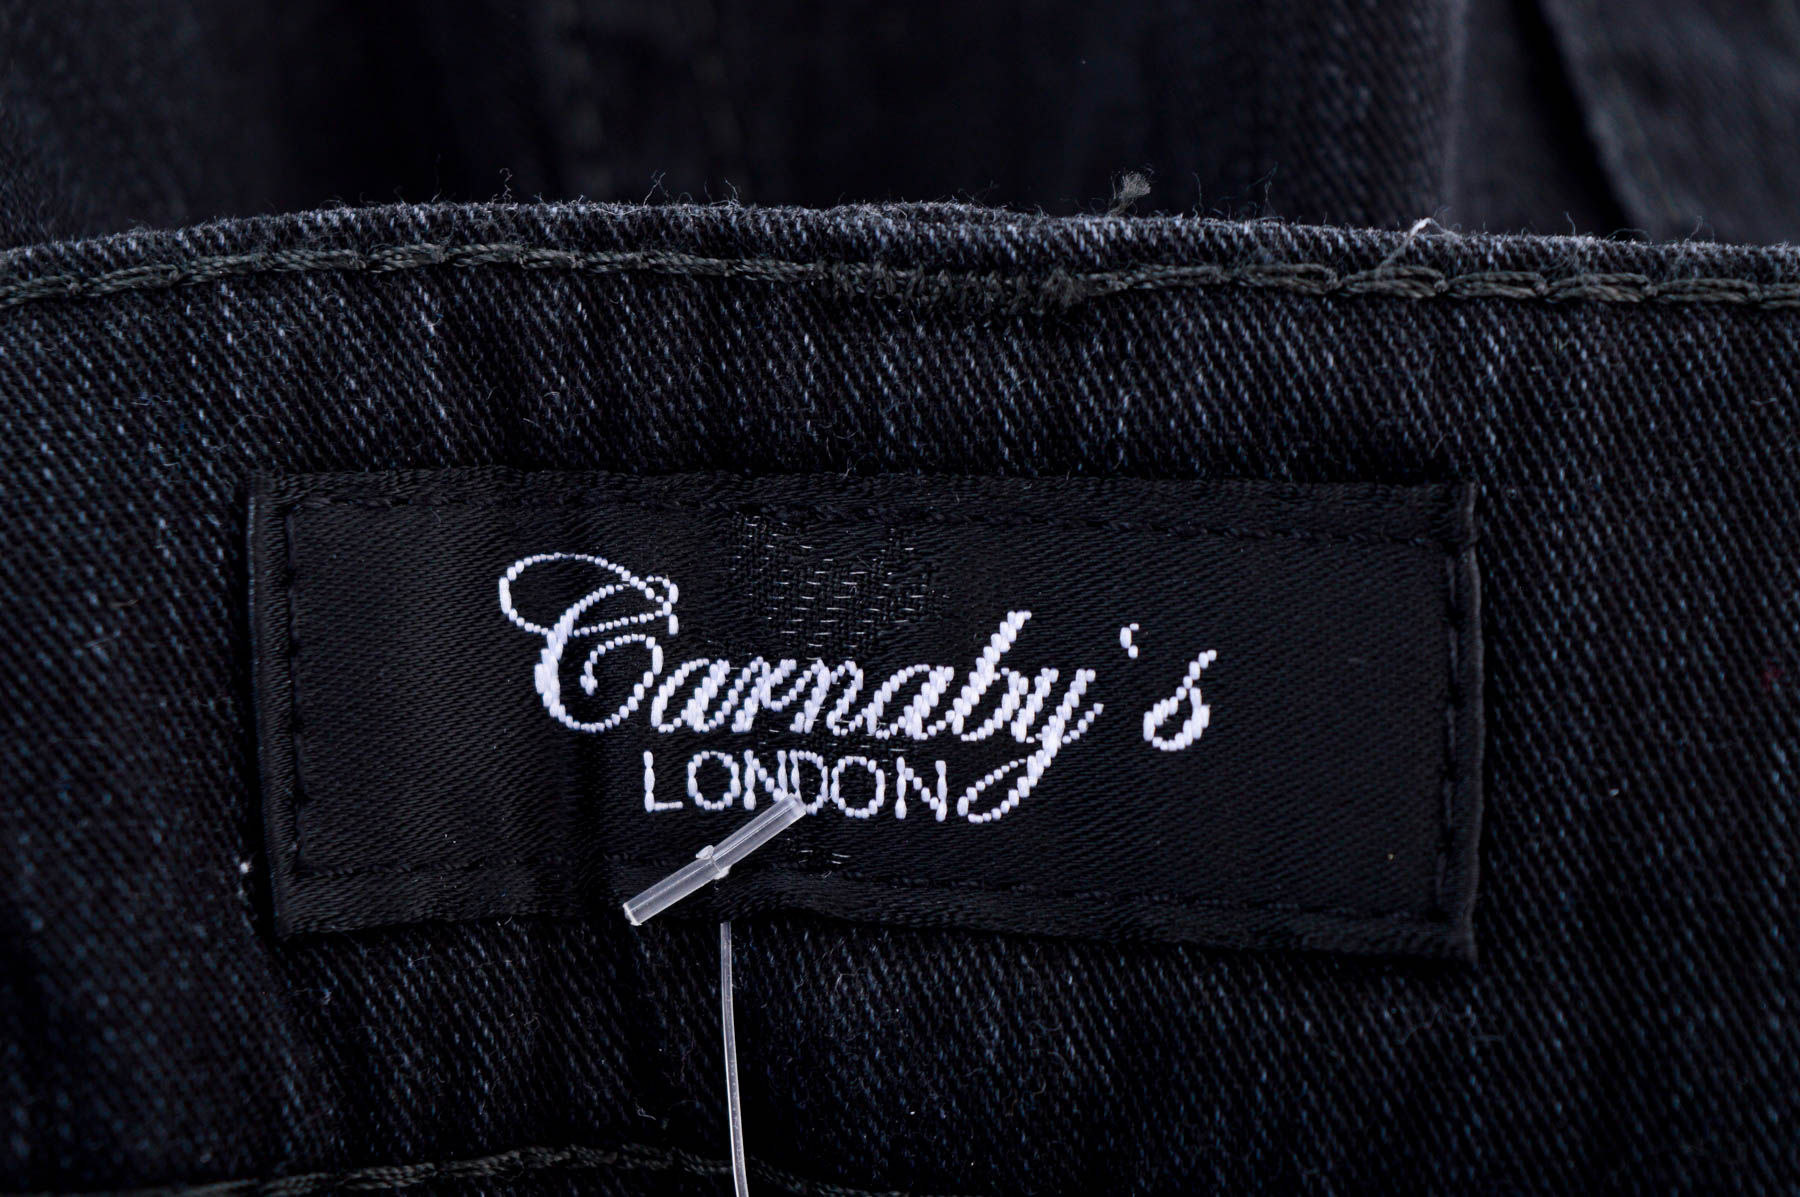 Men's trousers - Garnaby's - 2